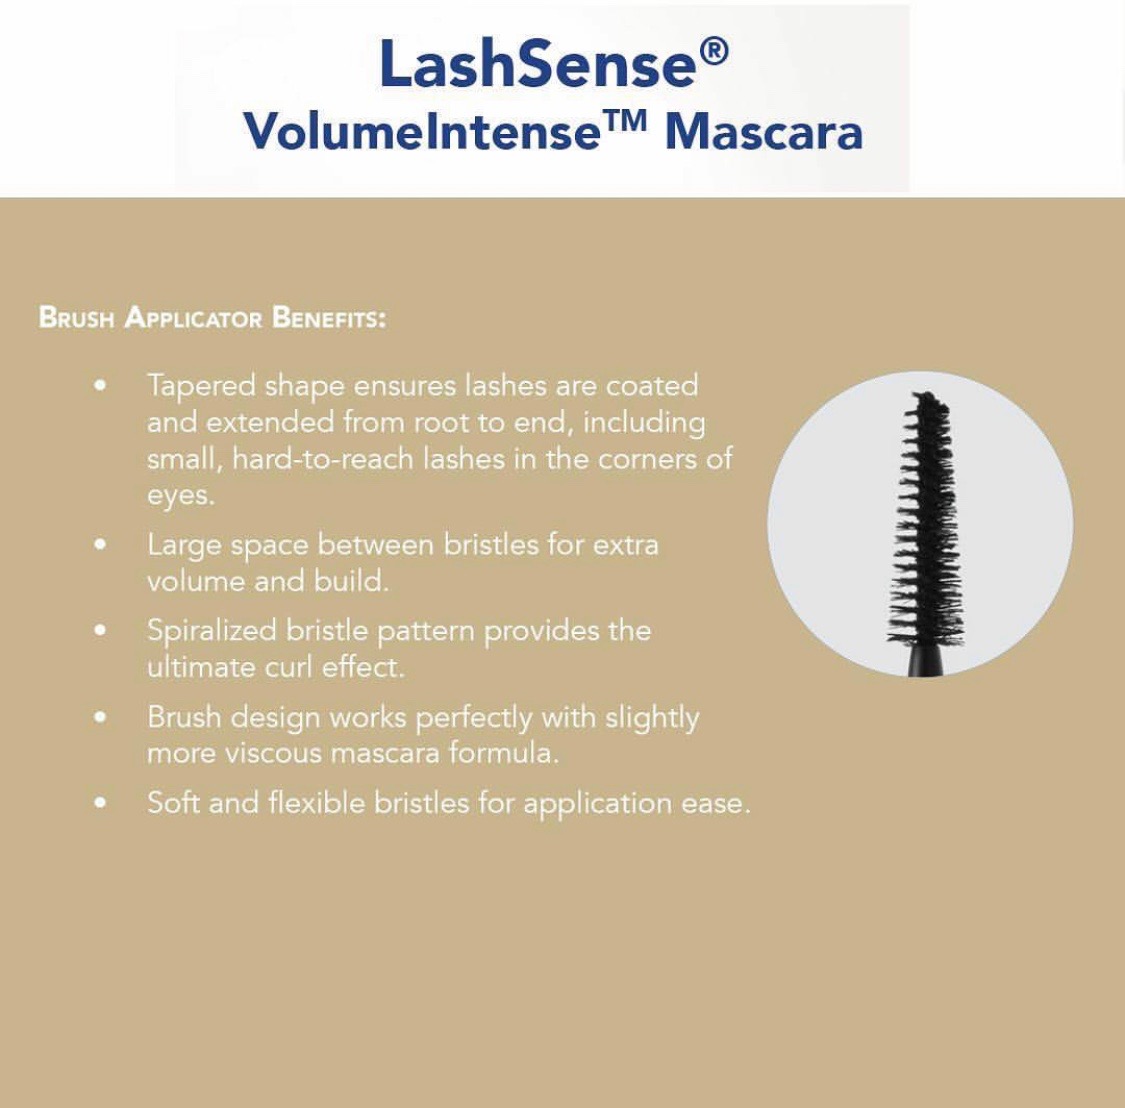 Copy of LashSense Mascara VolumeIntense Info